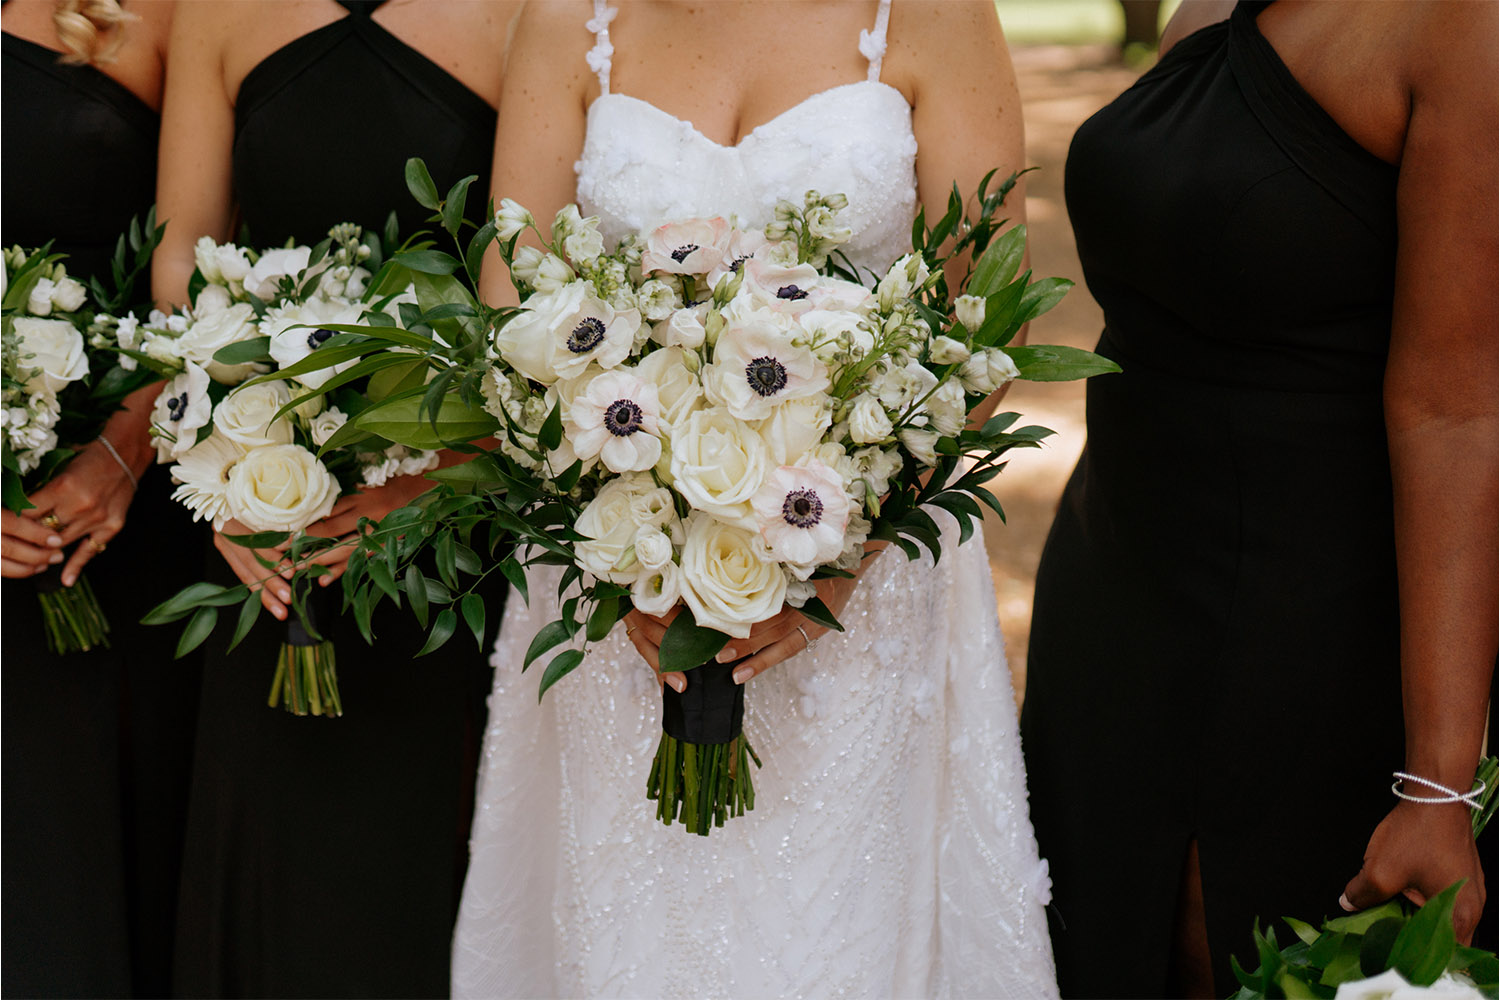 Close up of wedding bouquet.